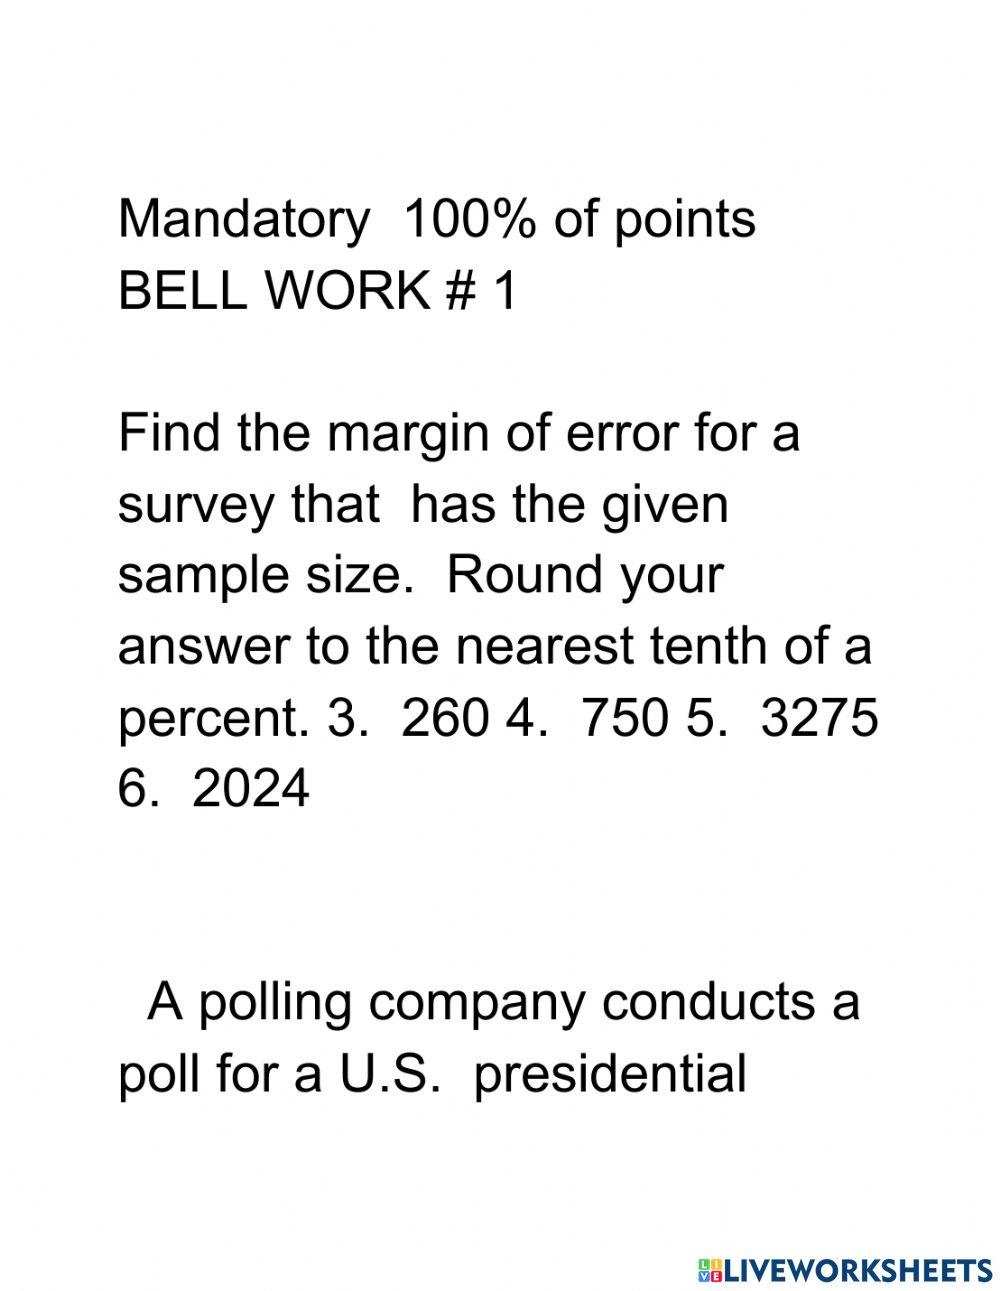 Mandatory bell work